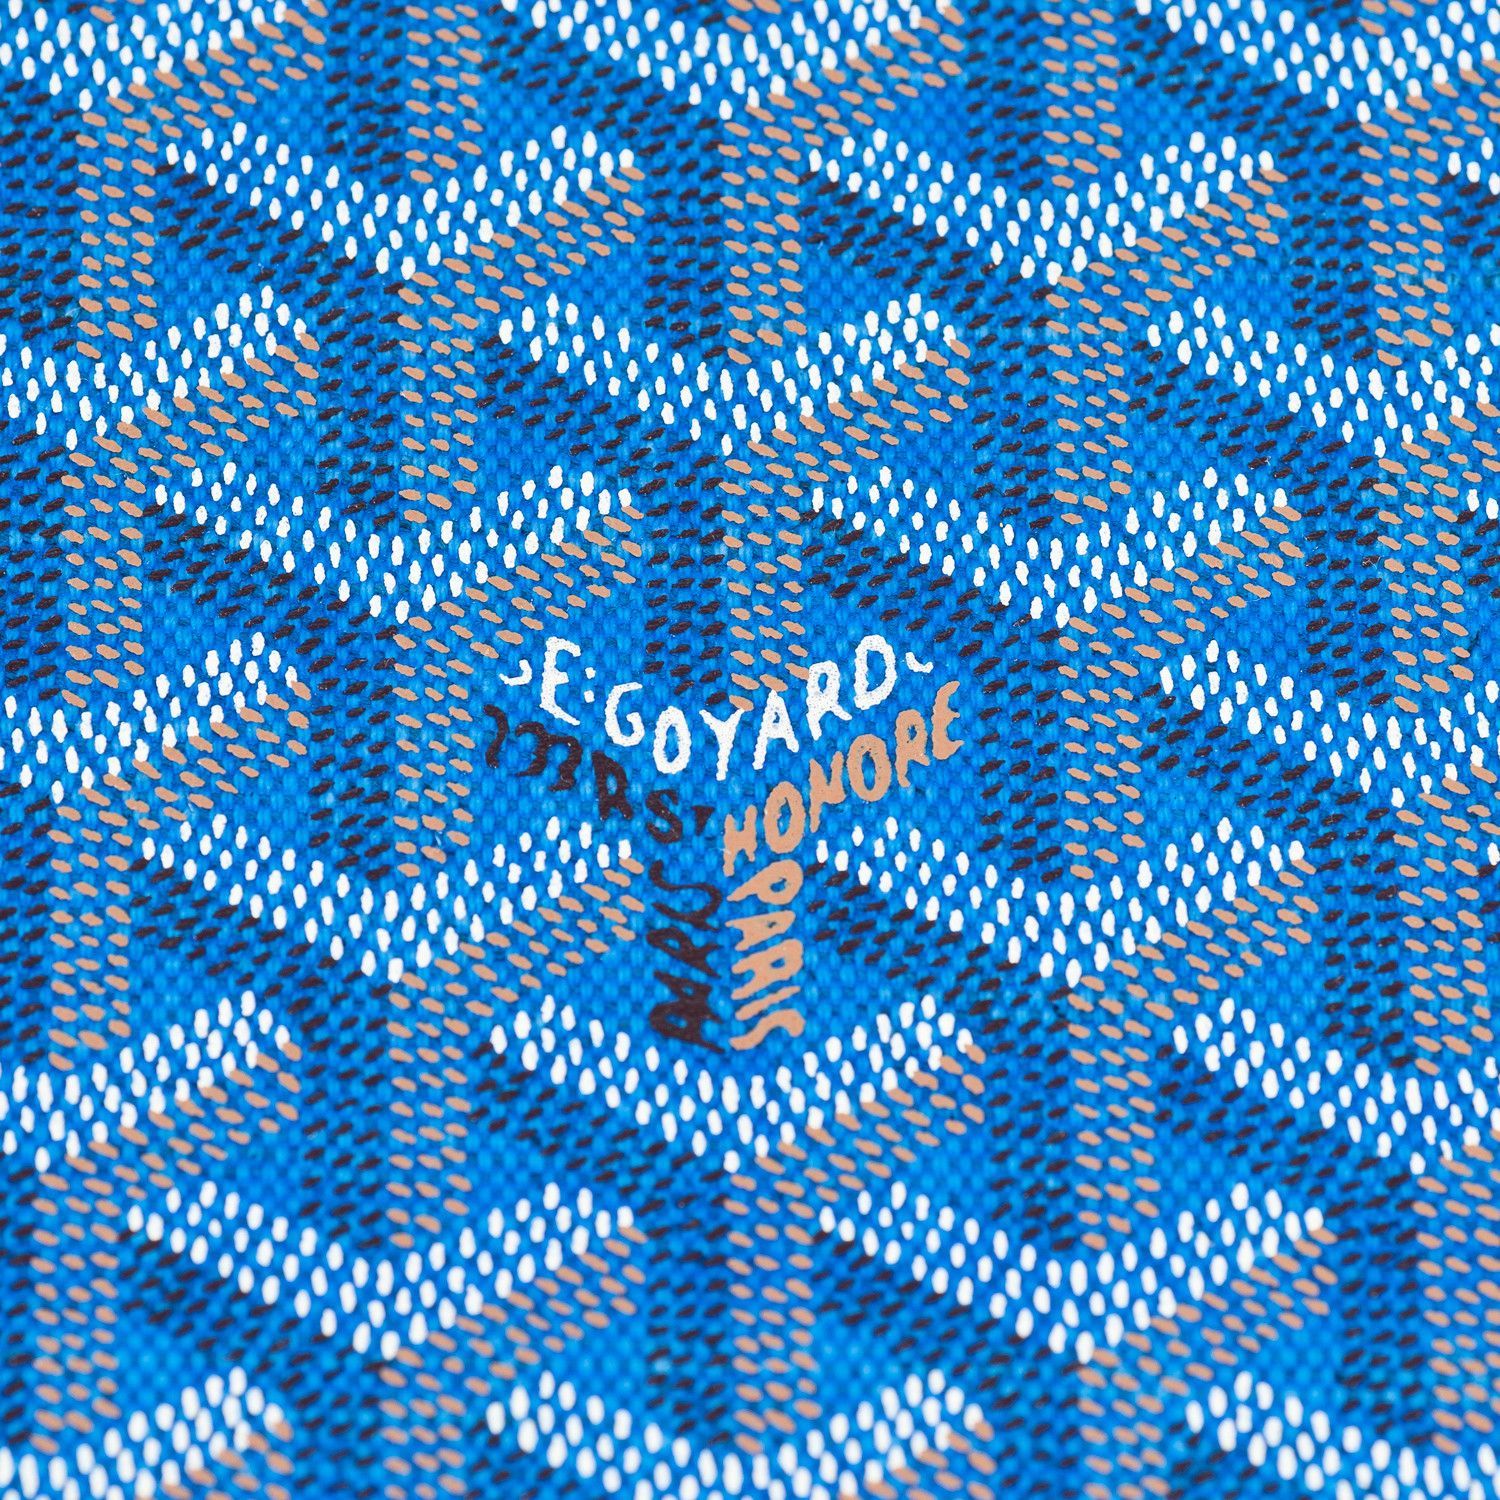 Blue Goyard Xs Max Wallpaper  Hypebeast wallpaper, Hype wallpaper,  Wallpaper doodle